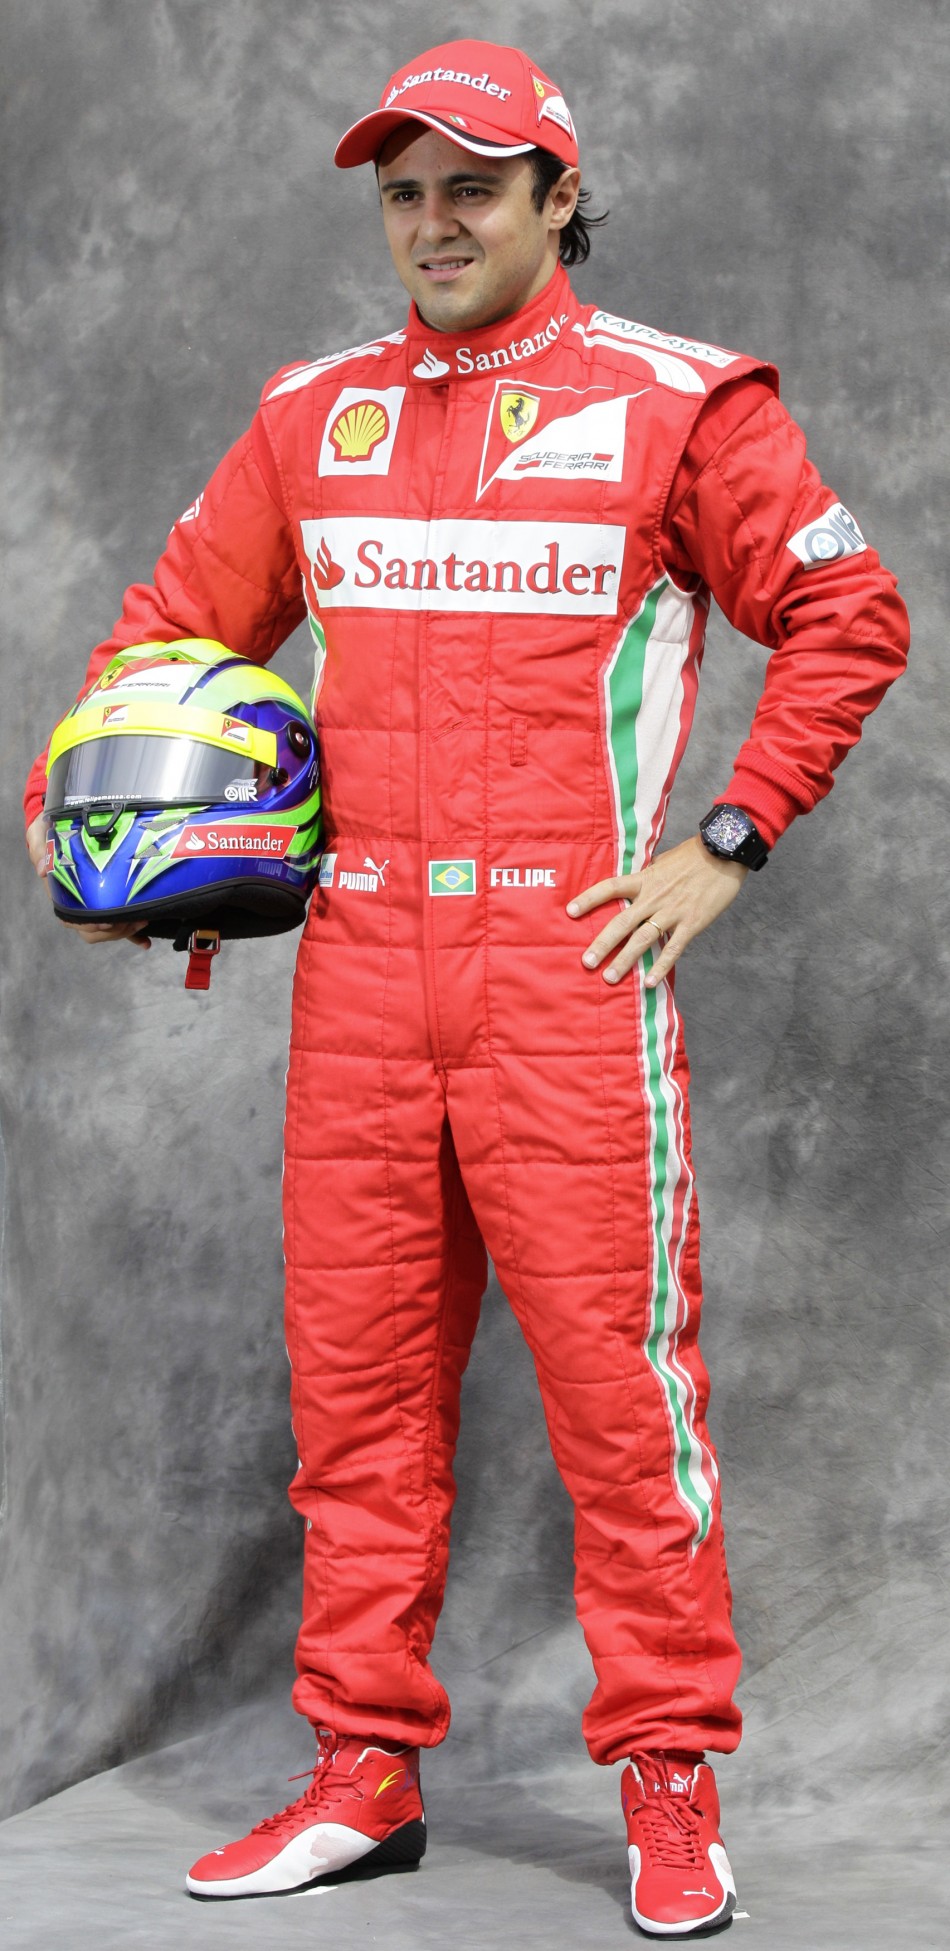 Ferrari Formula One driver Massa poses prior to the Australian F1 Grand Prix at the Albert Park circuit in Melbourne